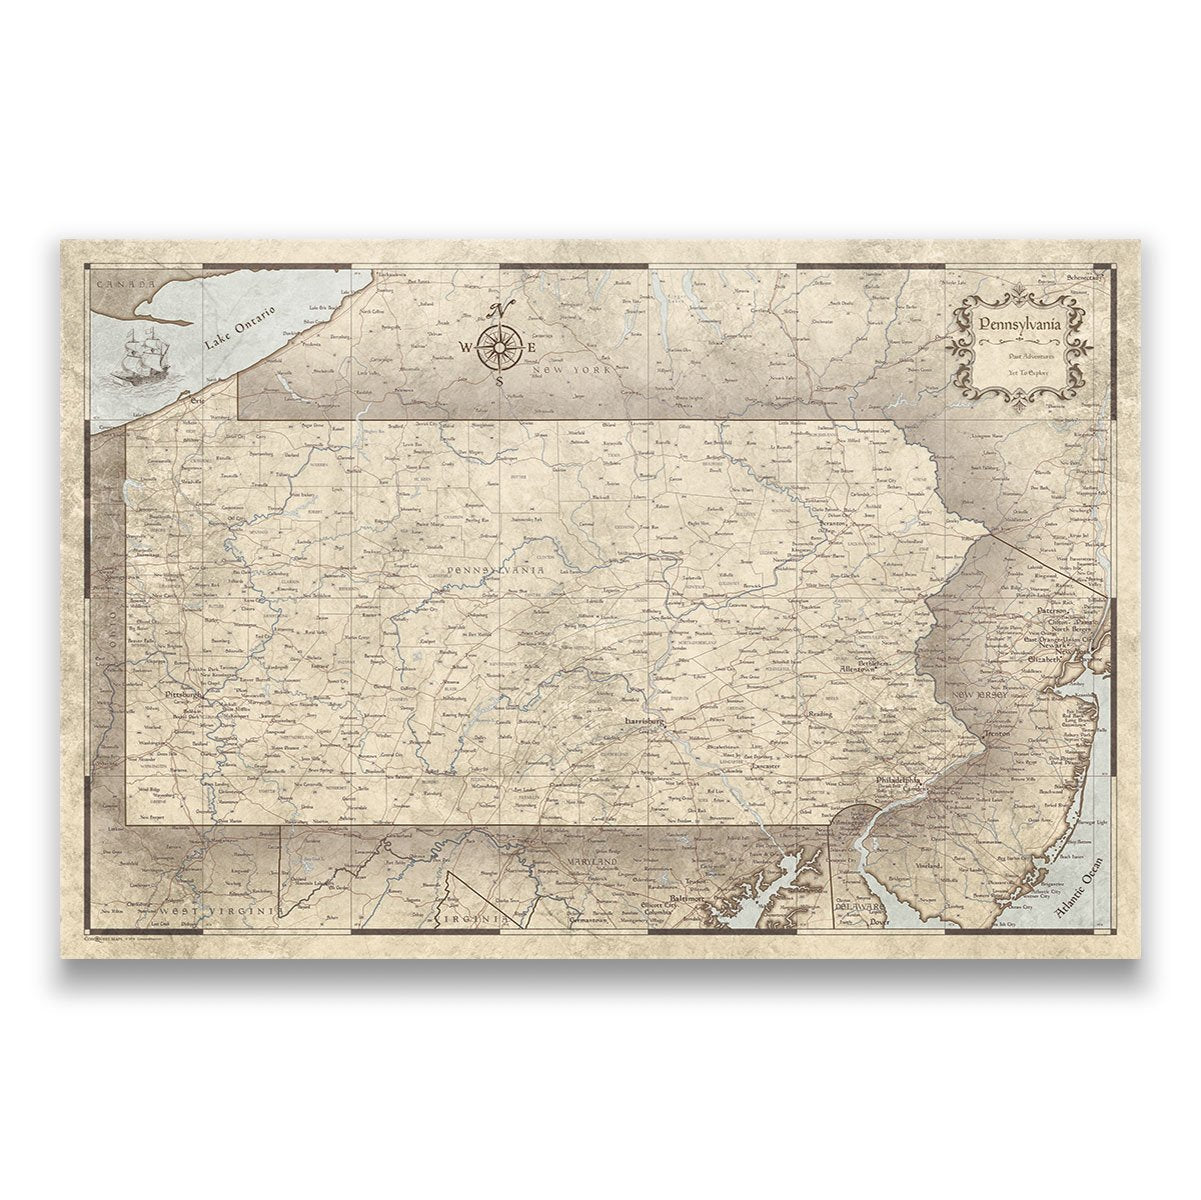 Pennsylvania Poster Maps